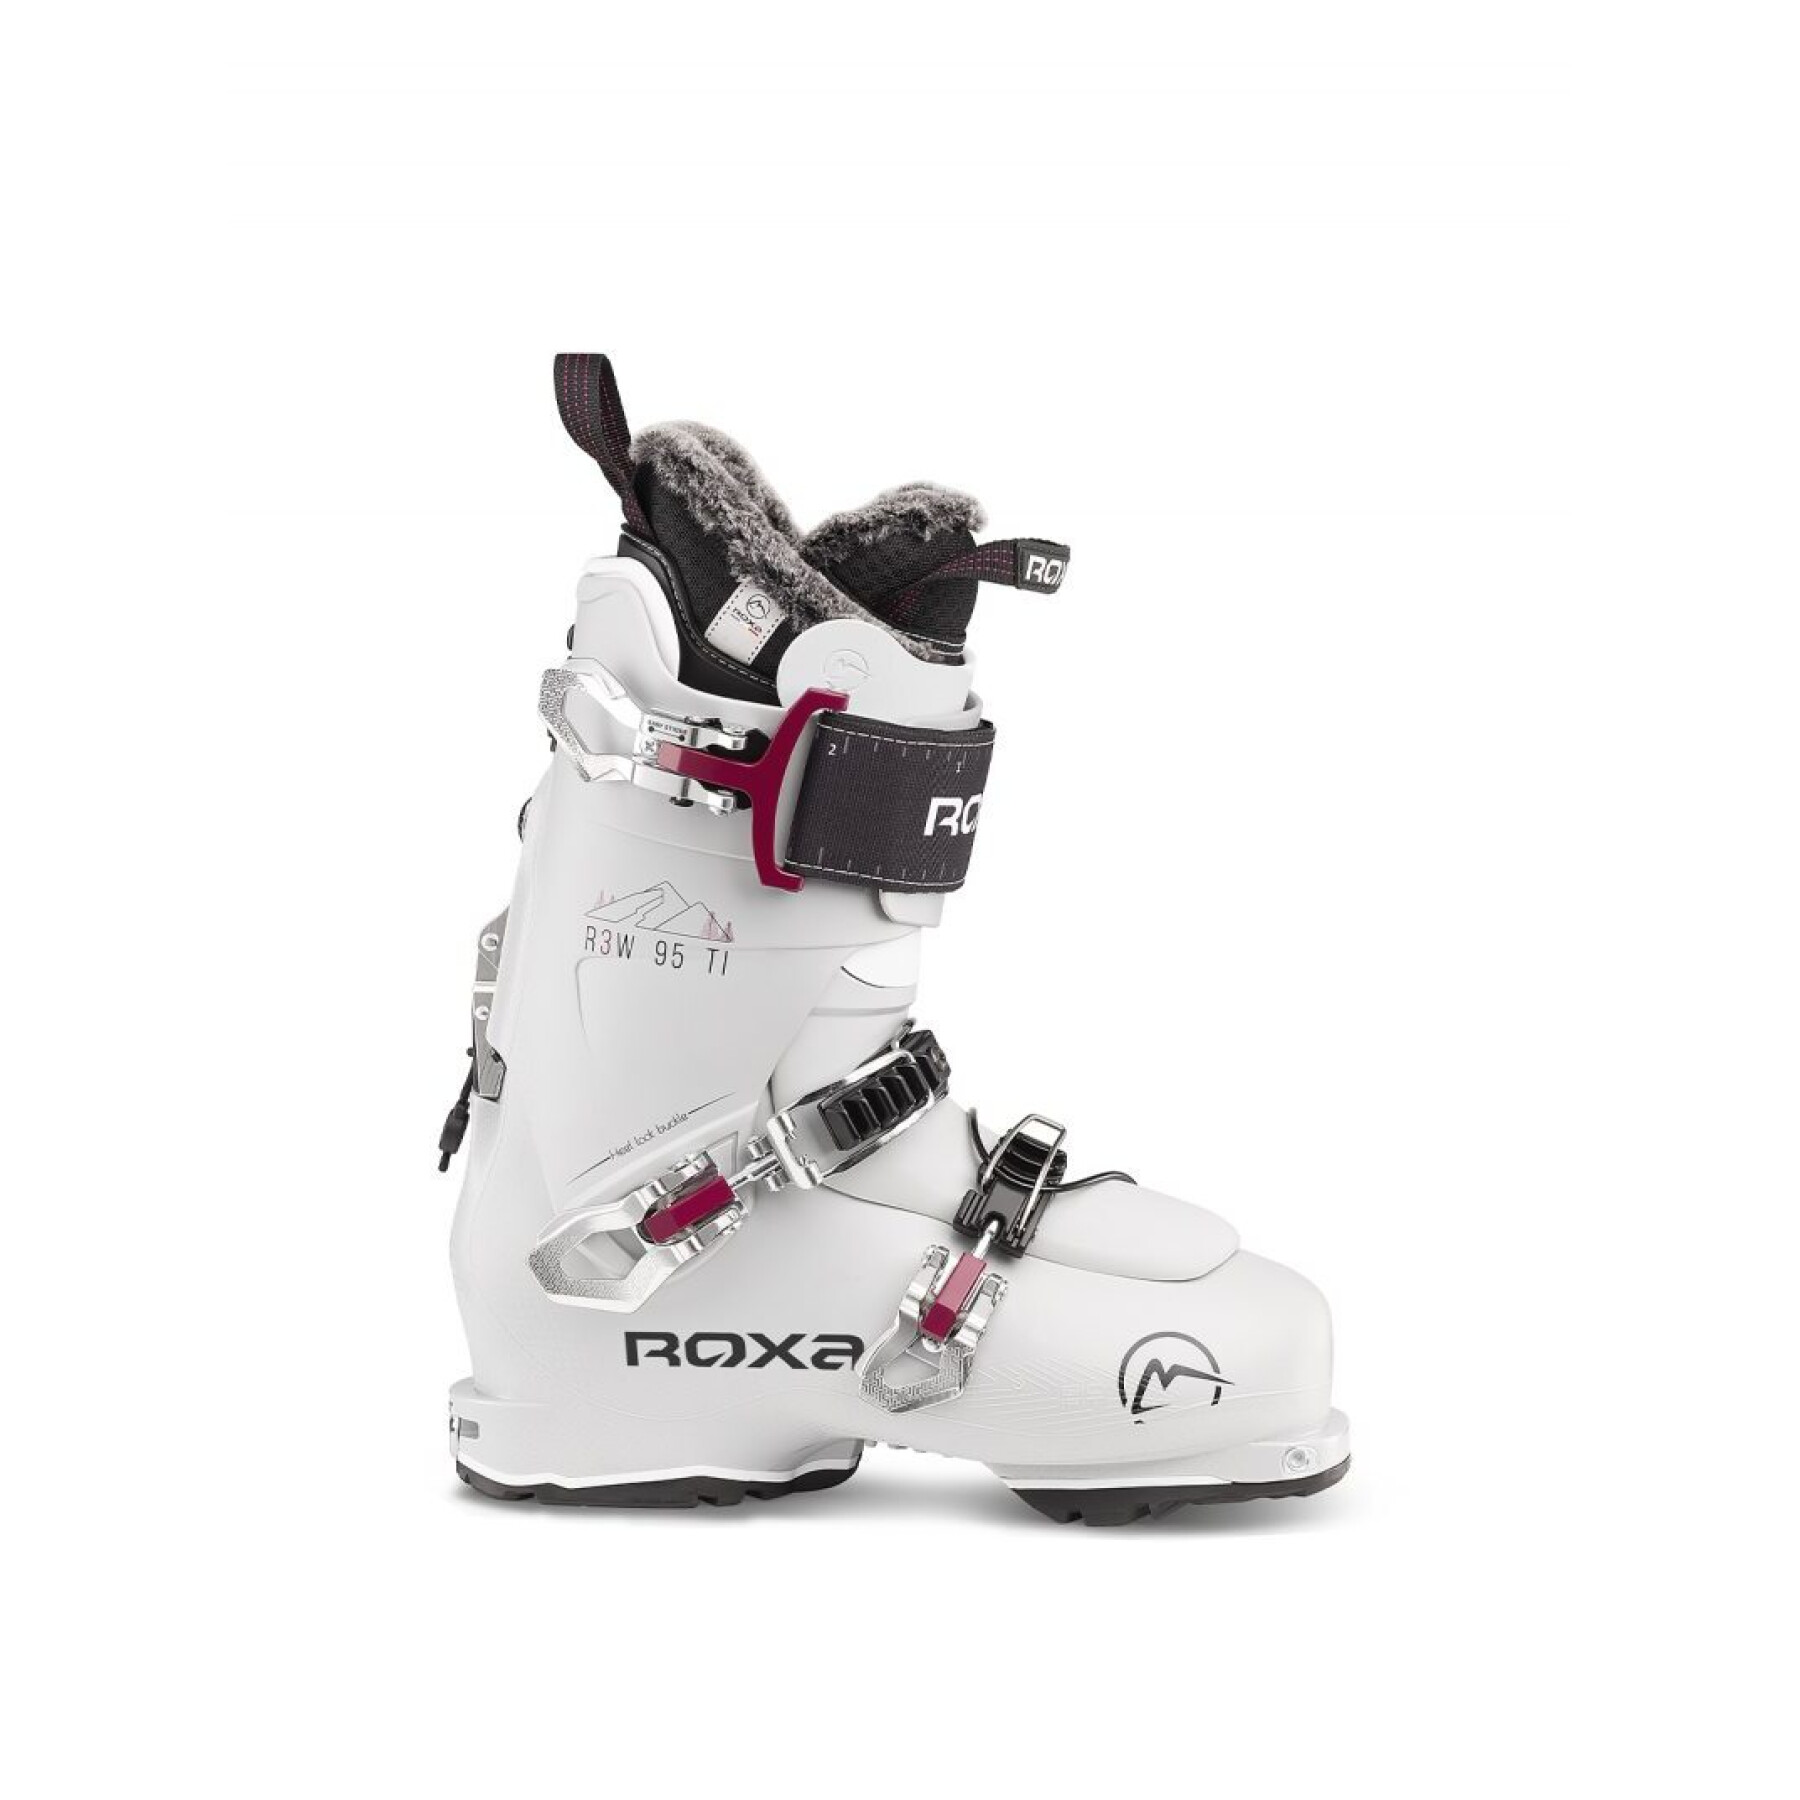 Chaussures de ski R3W 95 TI femme Roxa